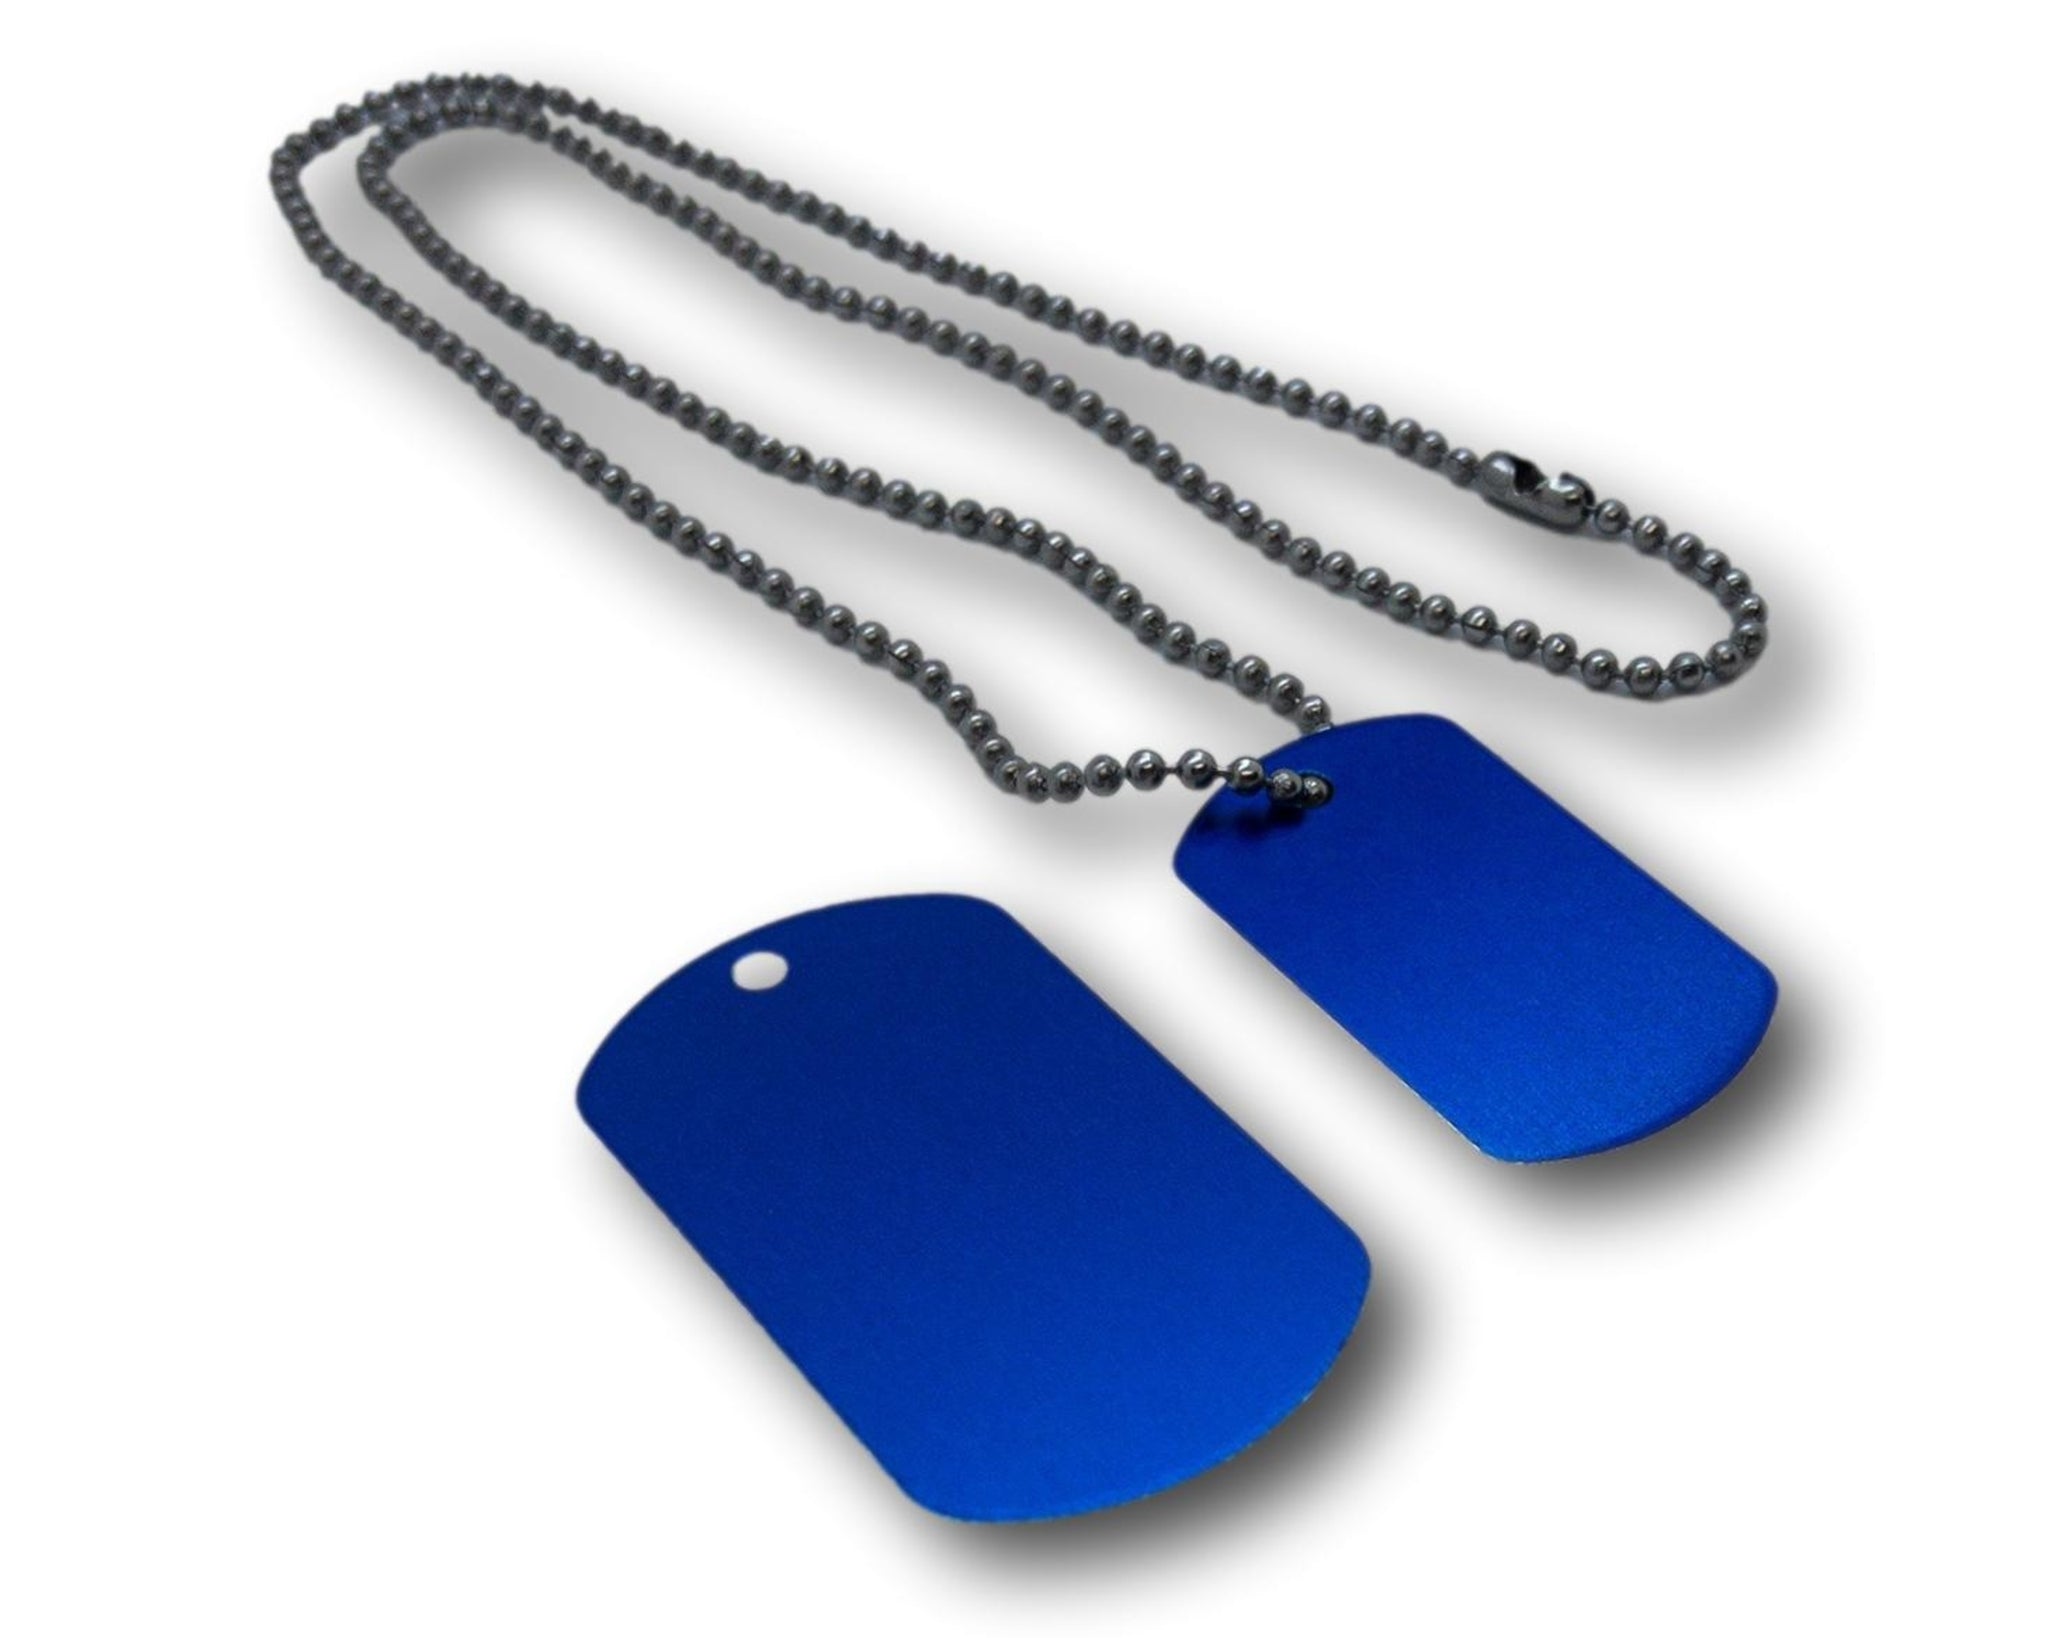 Military Dog Tag Medical Alert Necklace - Blue Aluminum Engraved